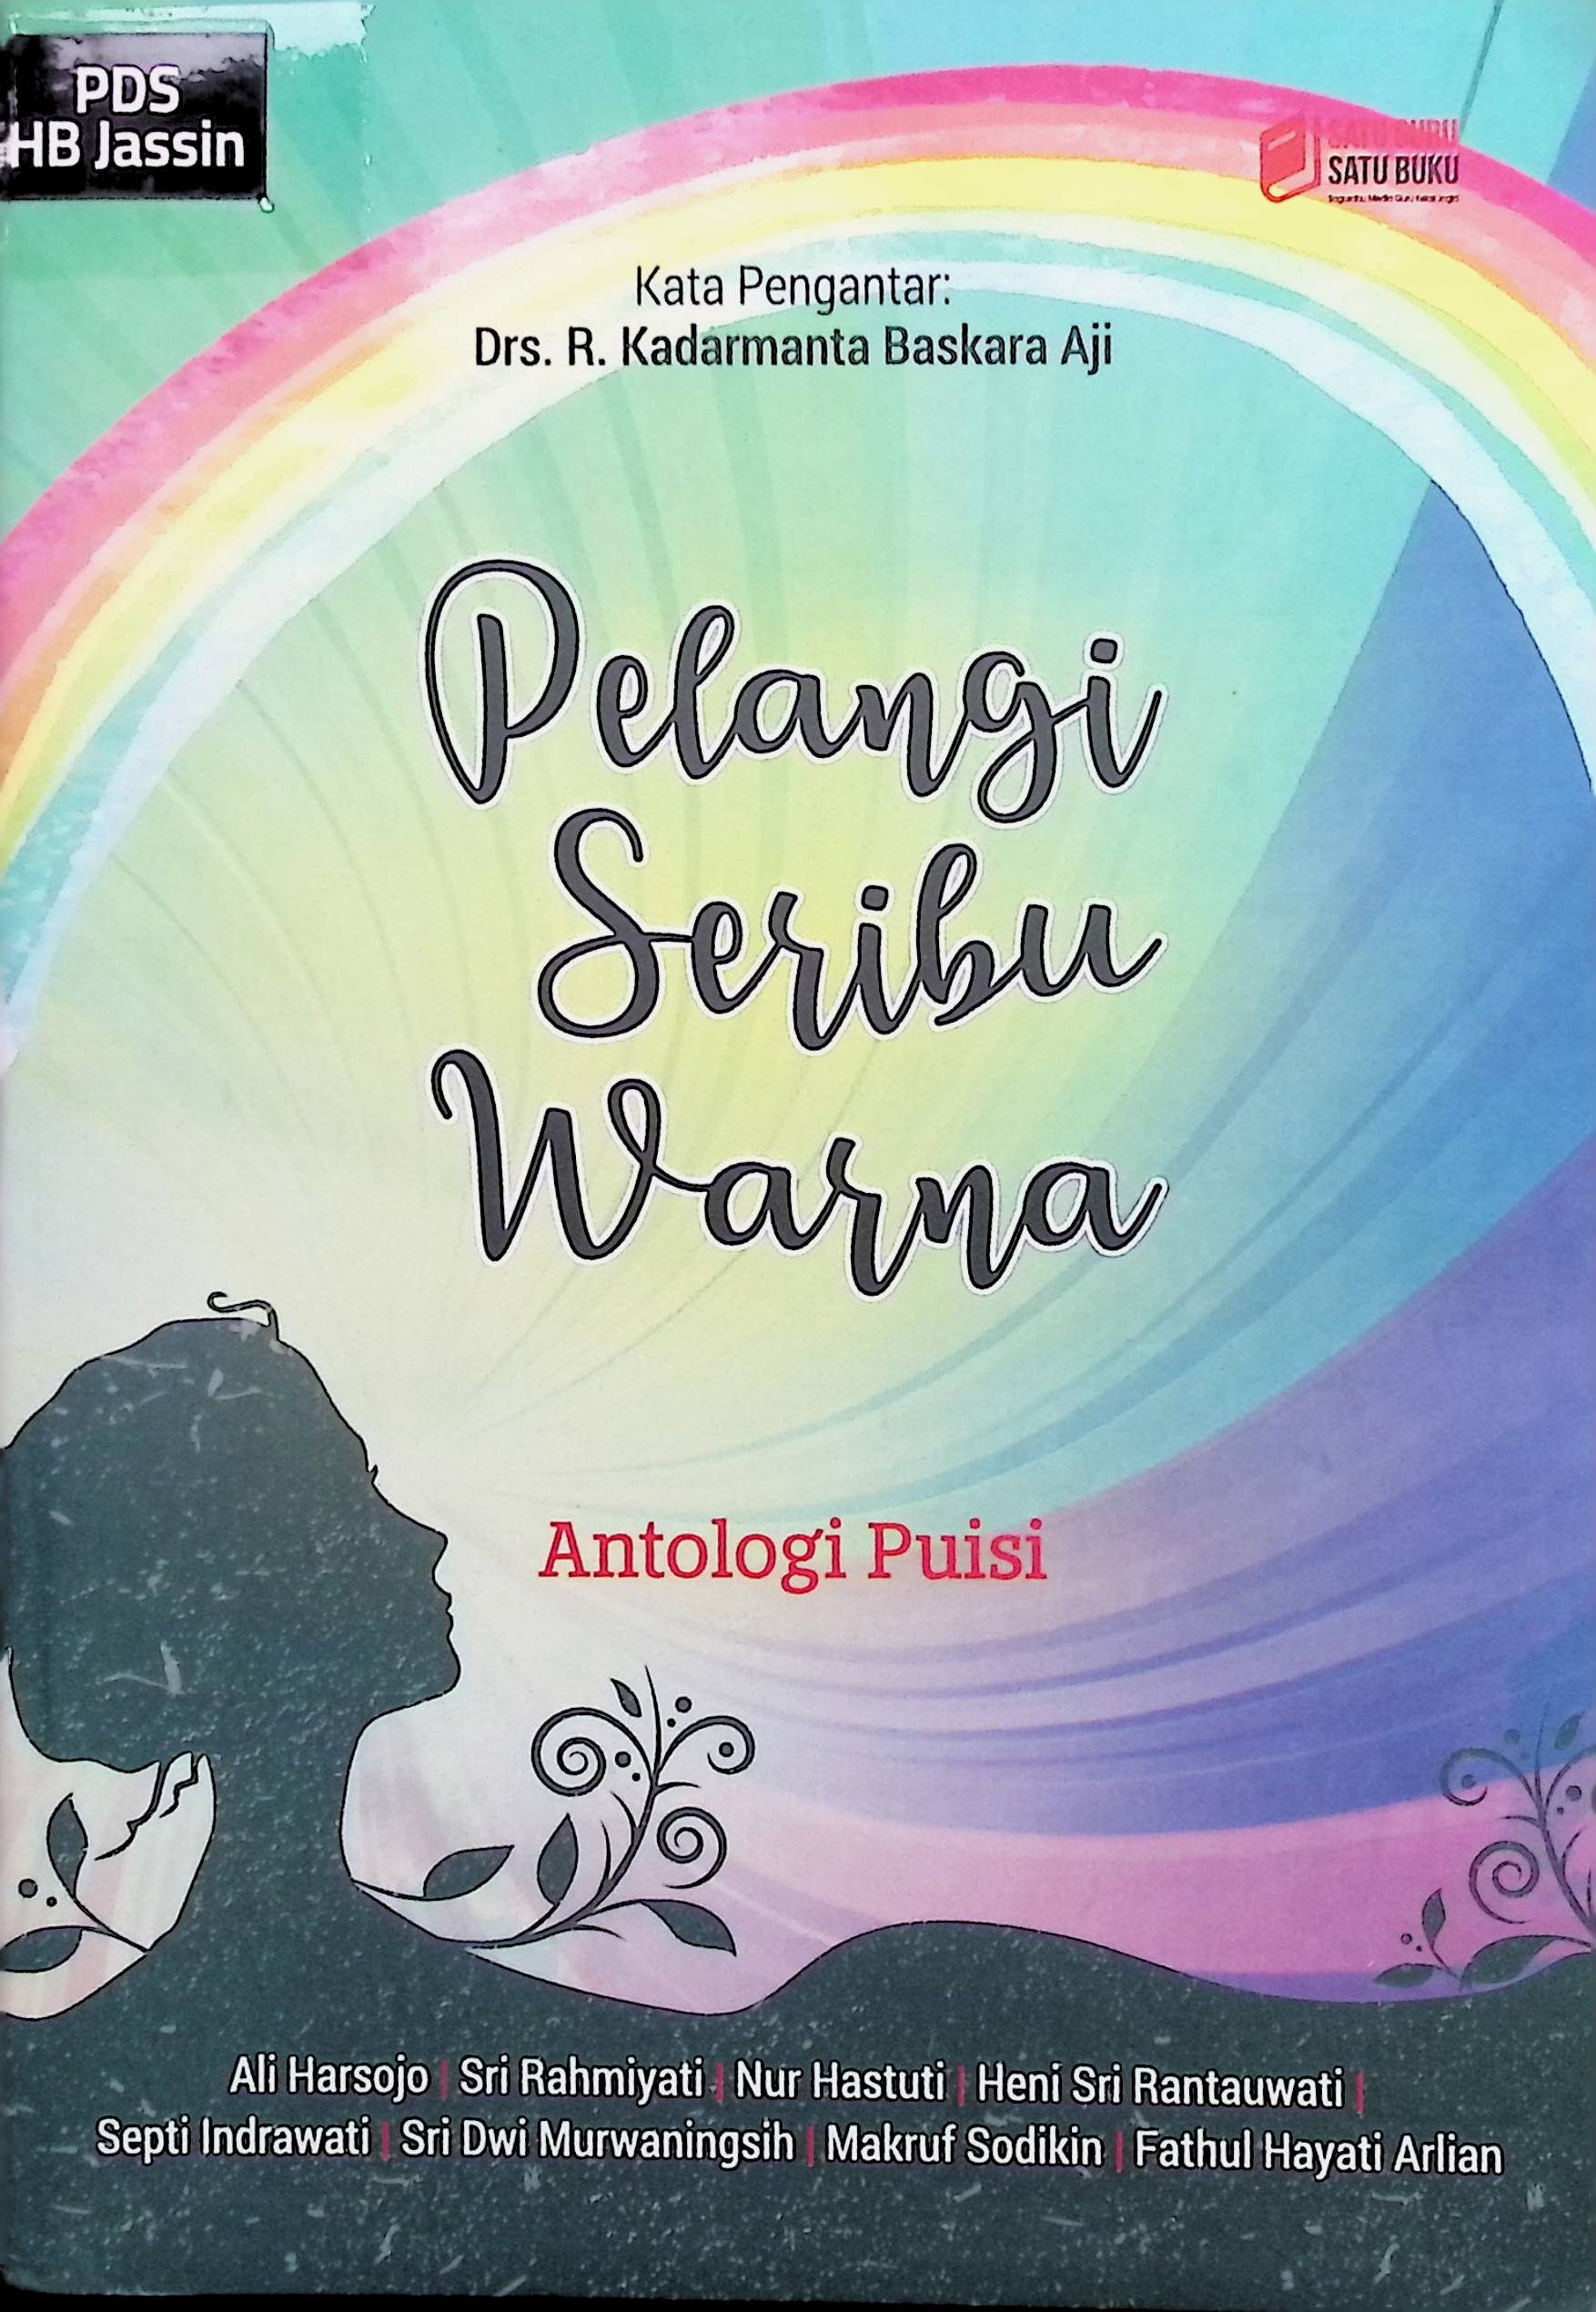 Antologi Puisi Seribu Warna